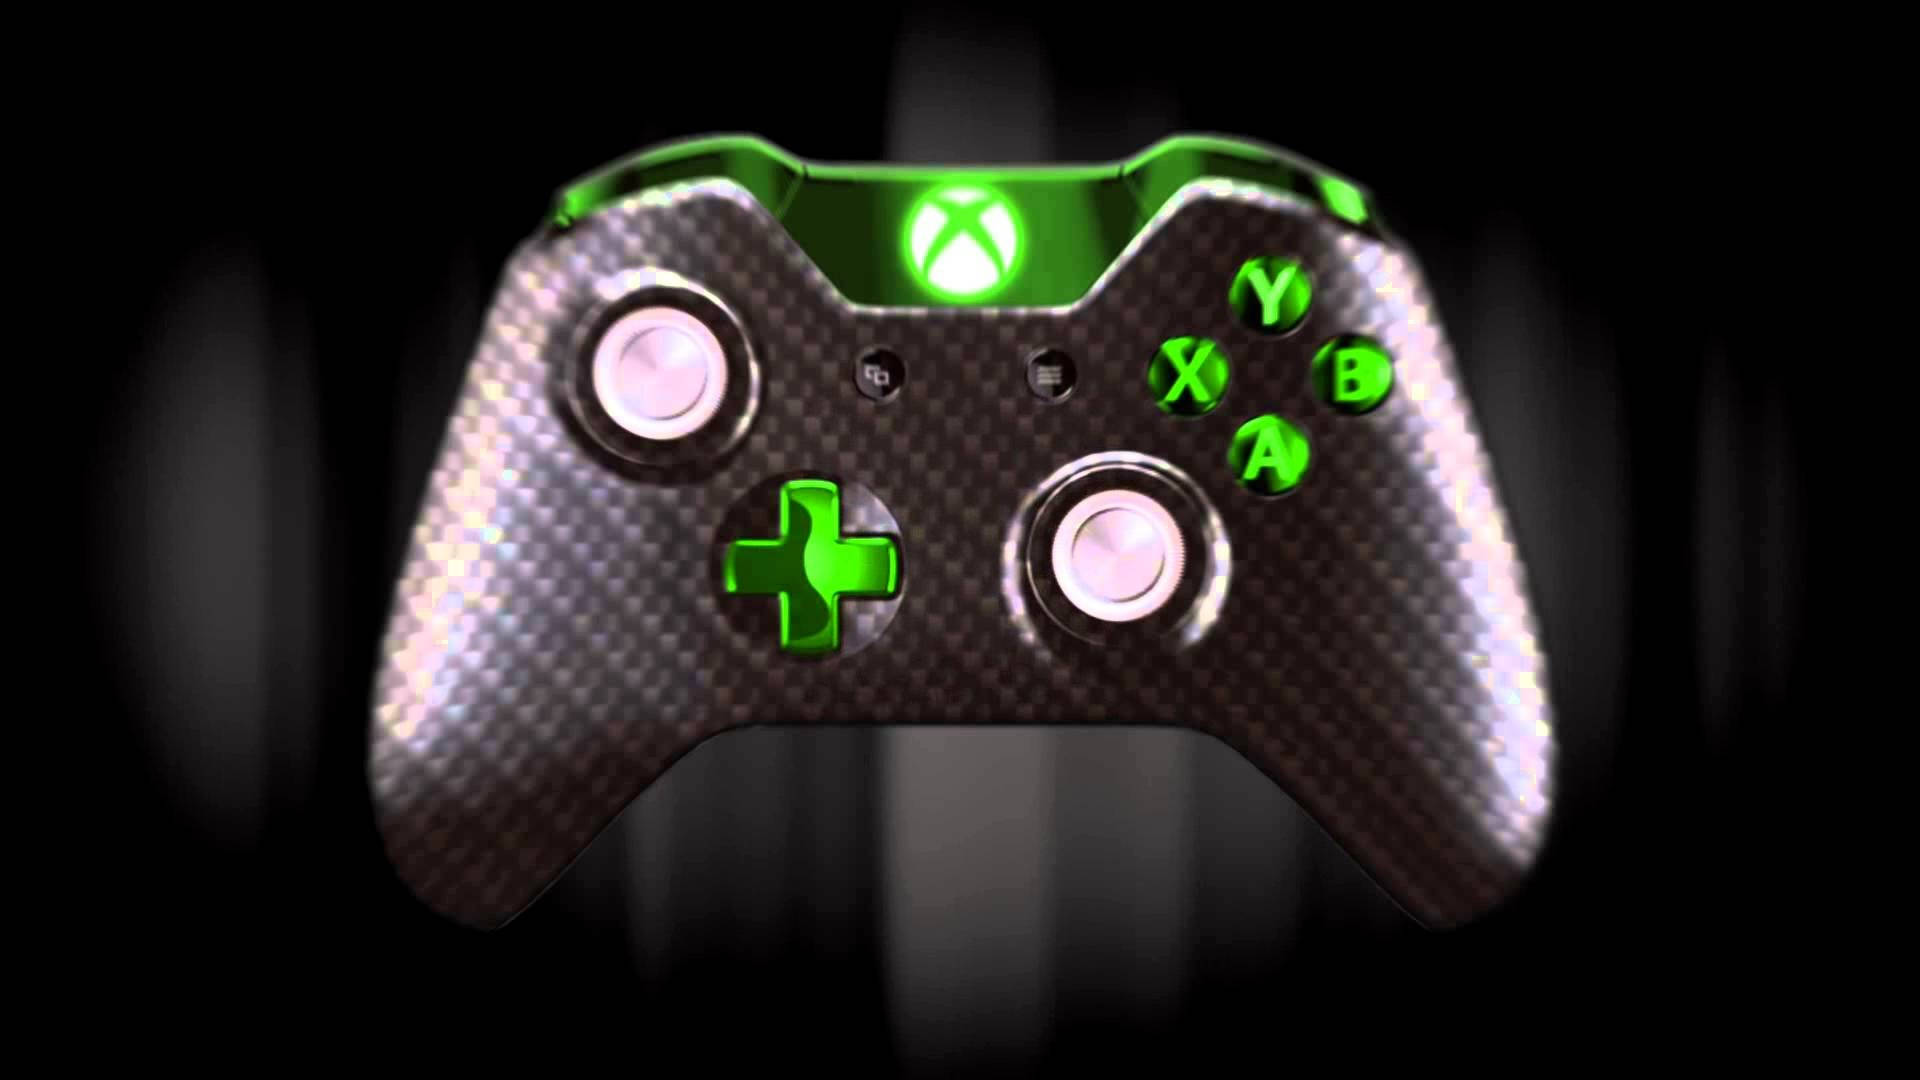 Xboxone X-logotyp På Kontrollen. Wallpaper